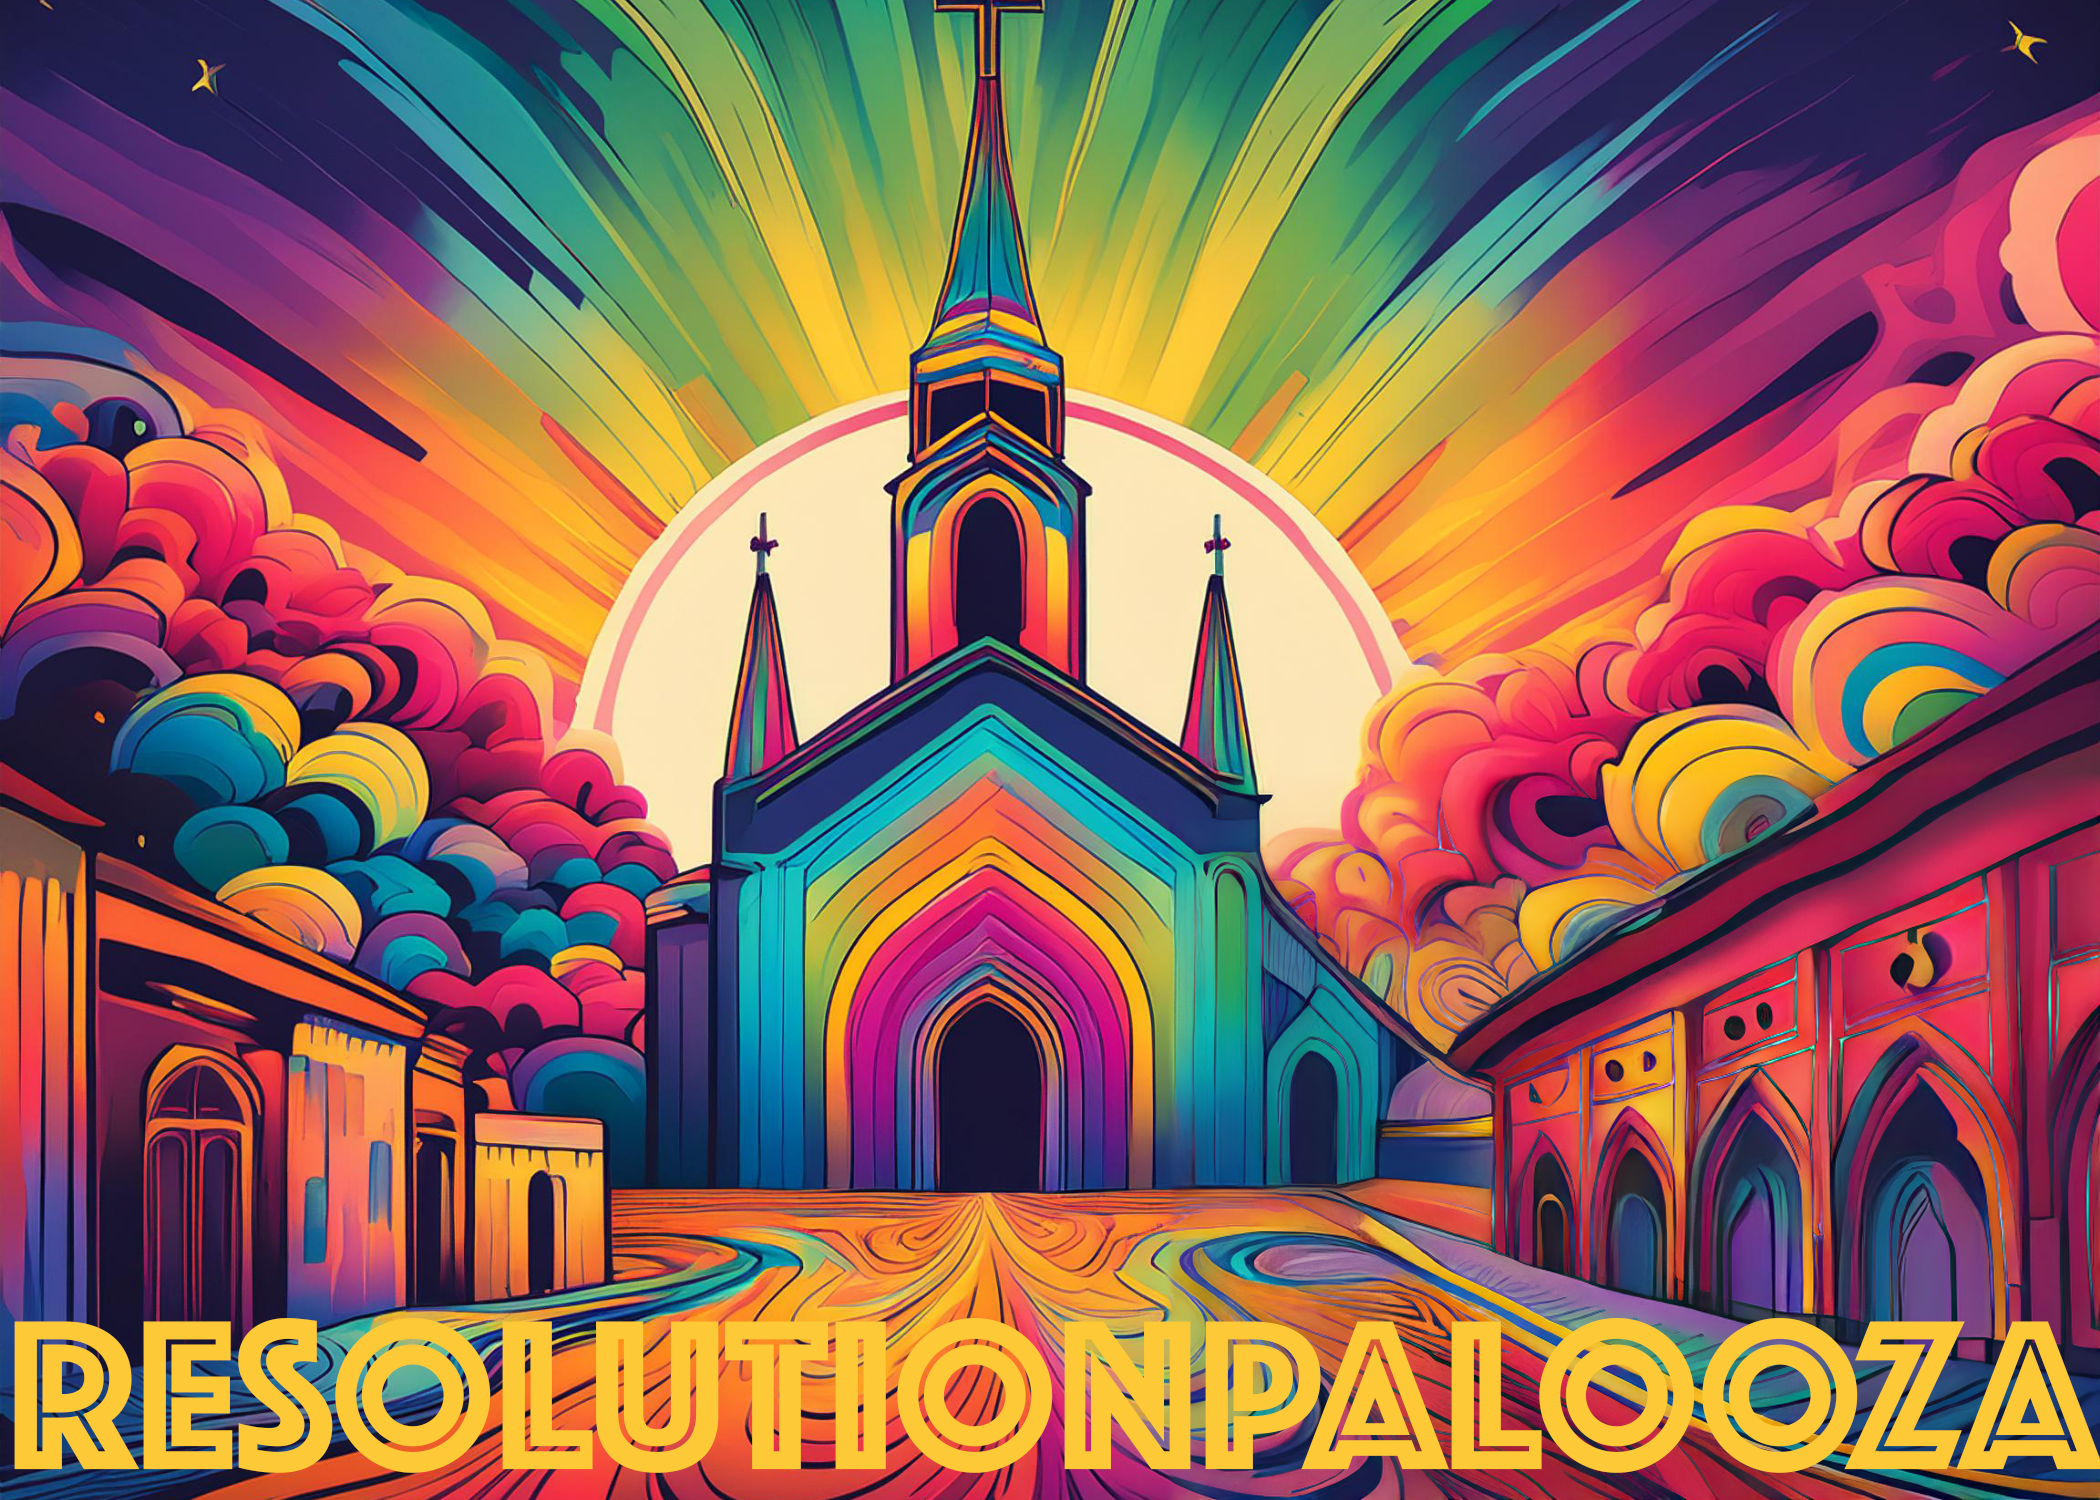 colorful church with RESOLUTIONPALOOZA written below